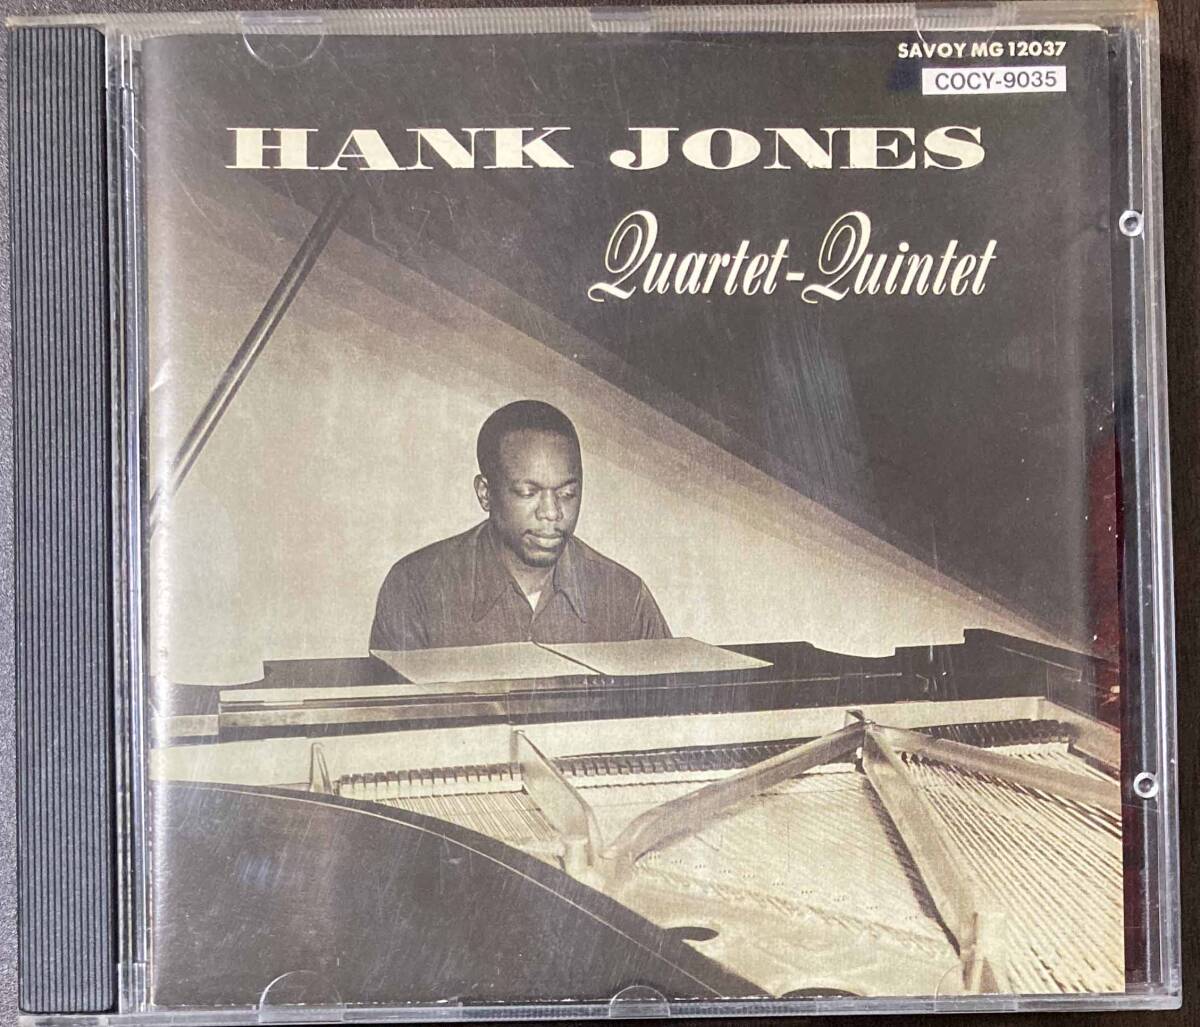 Hank Jones / Hank Jones Quartet-Quintet 中古CD 国内盤 帯付き の画像2